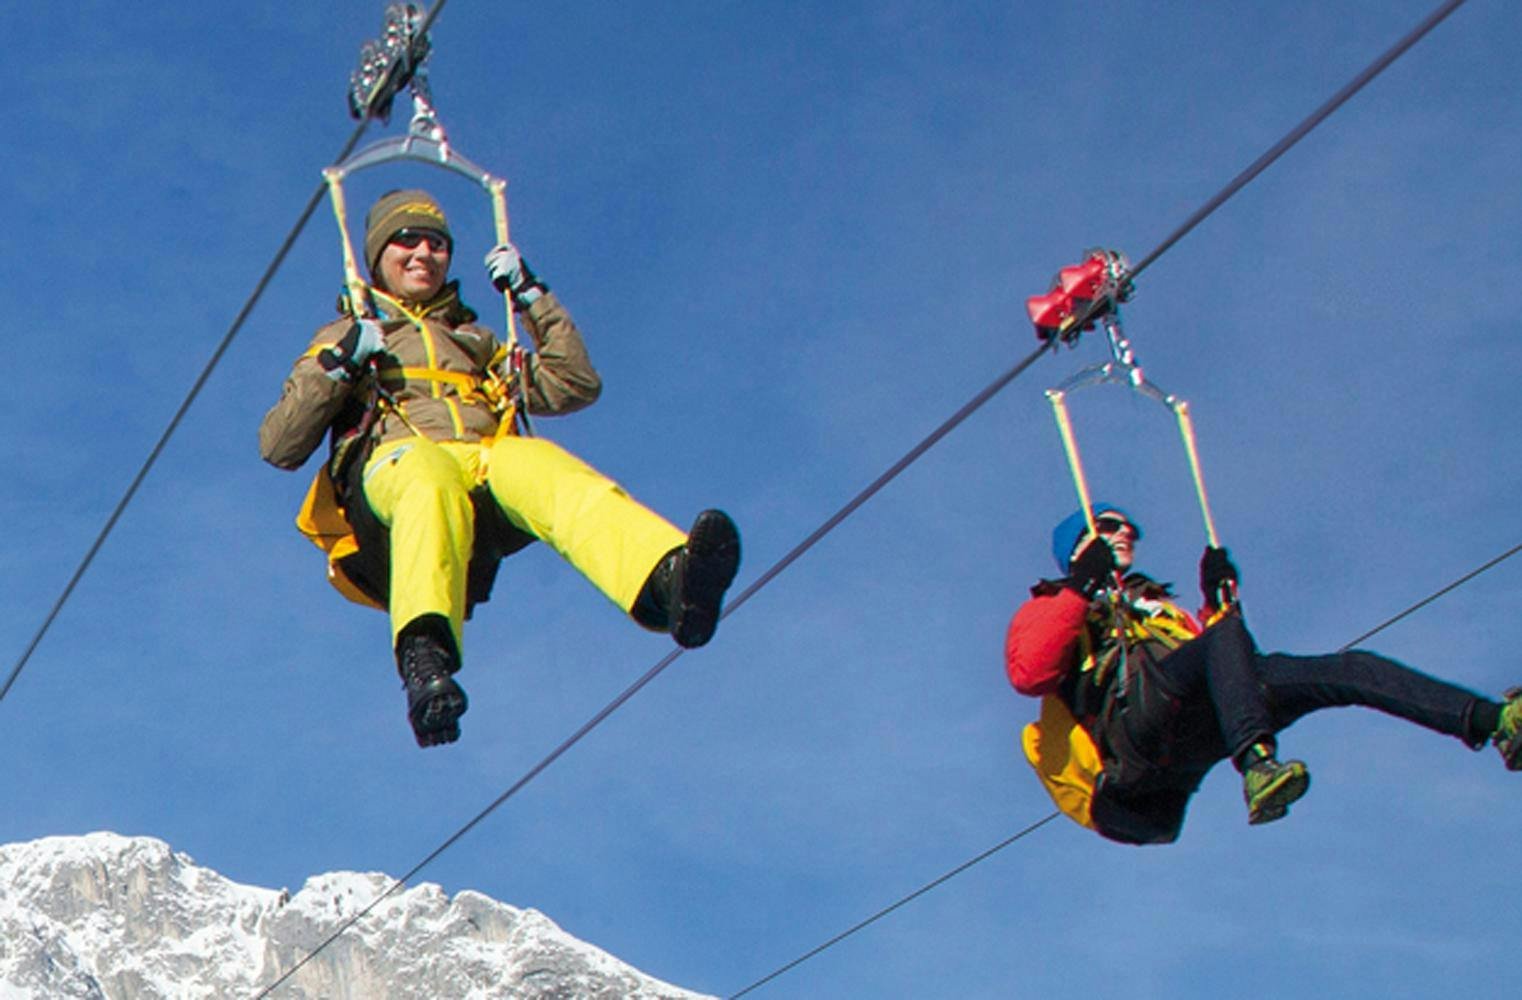 Zipline Flying Fox | größte Zipline der Alpen | 2,5 km